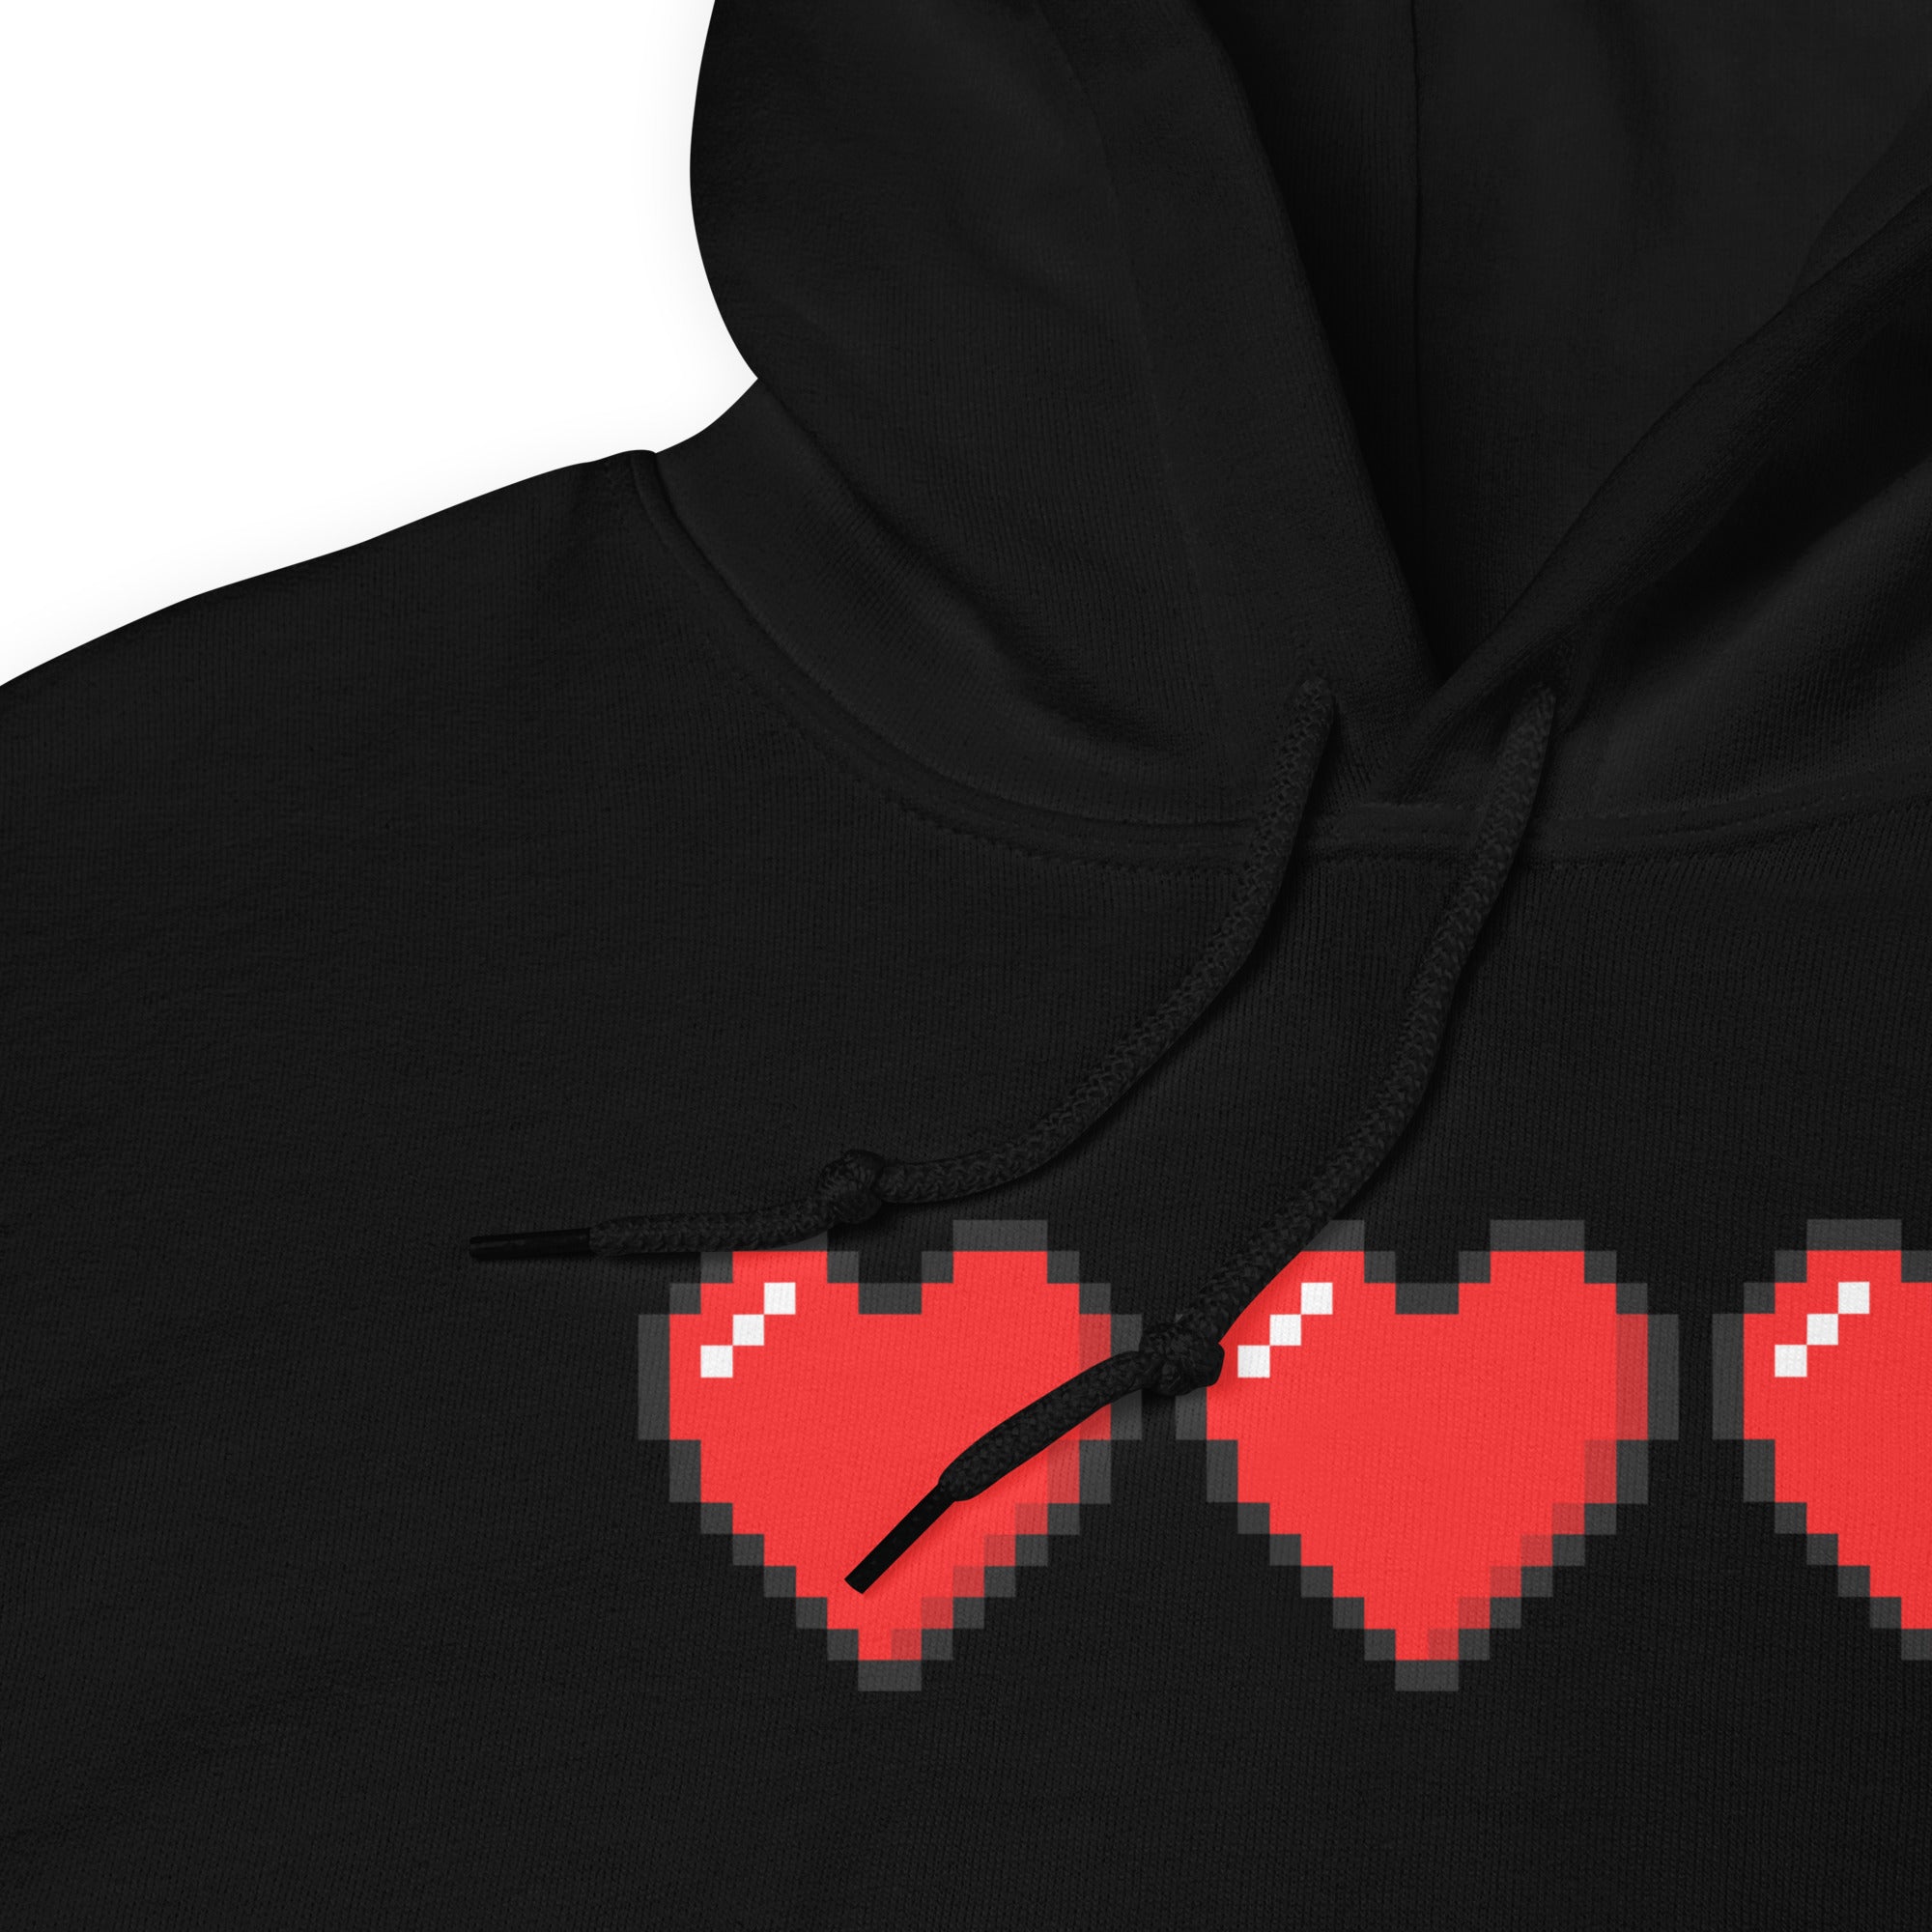 3 Heart Meter Retro 8 Bit Video Game Pixelated Unisex Hoodie Sweatshirt